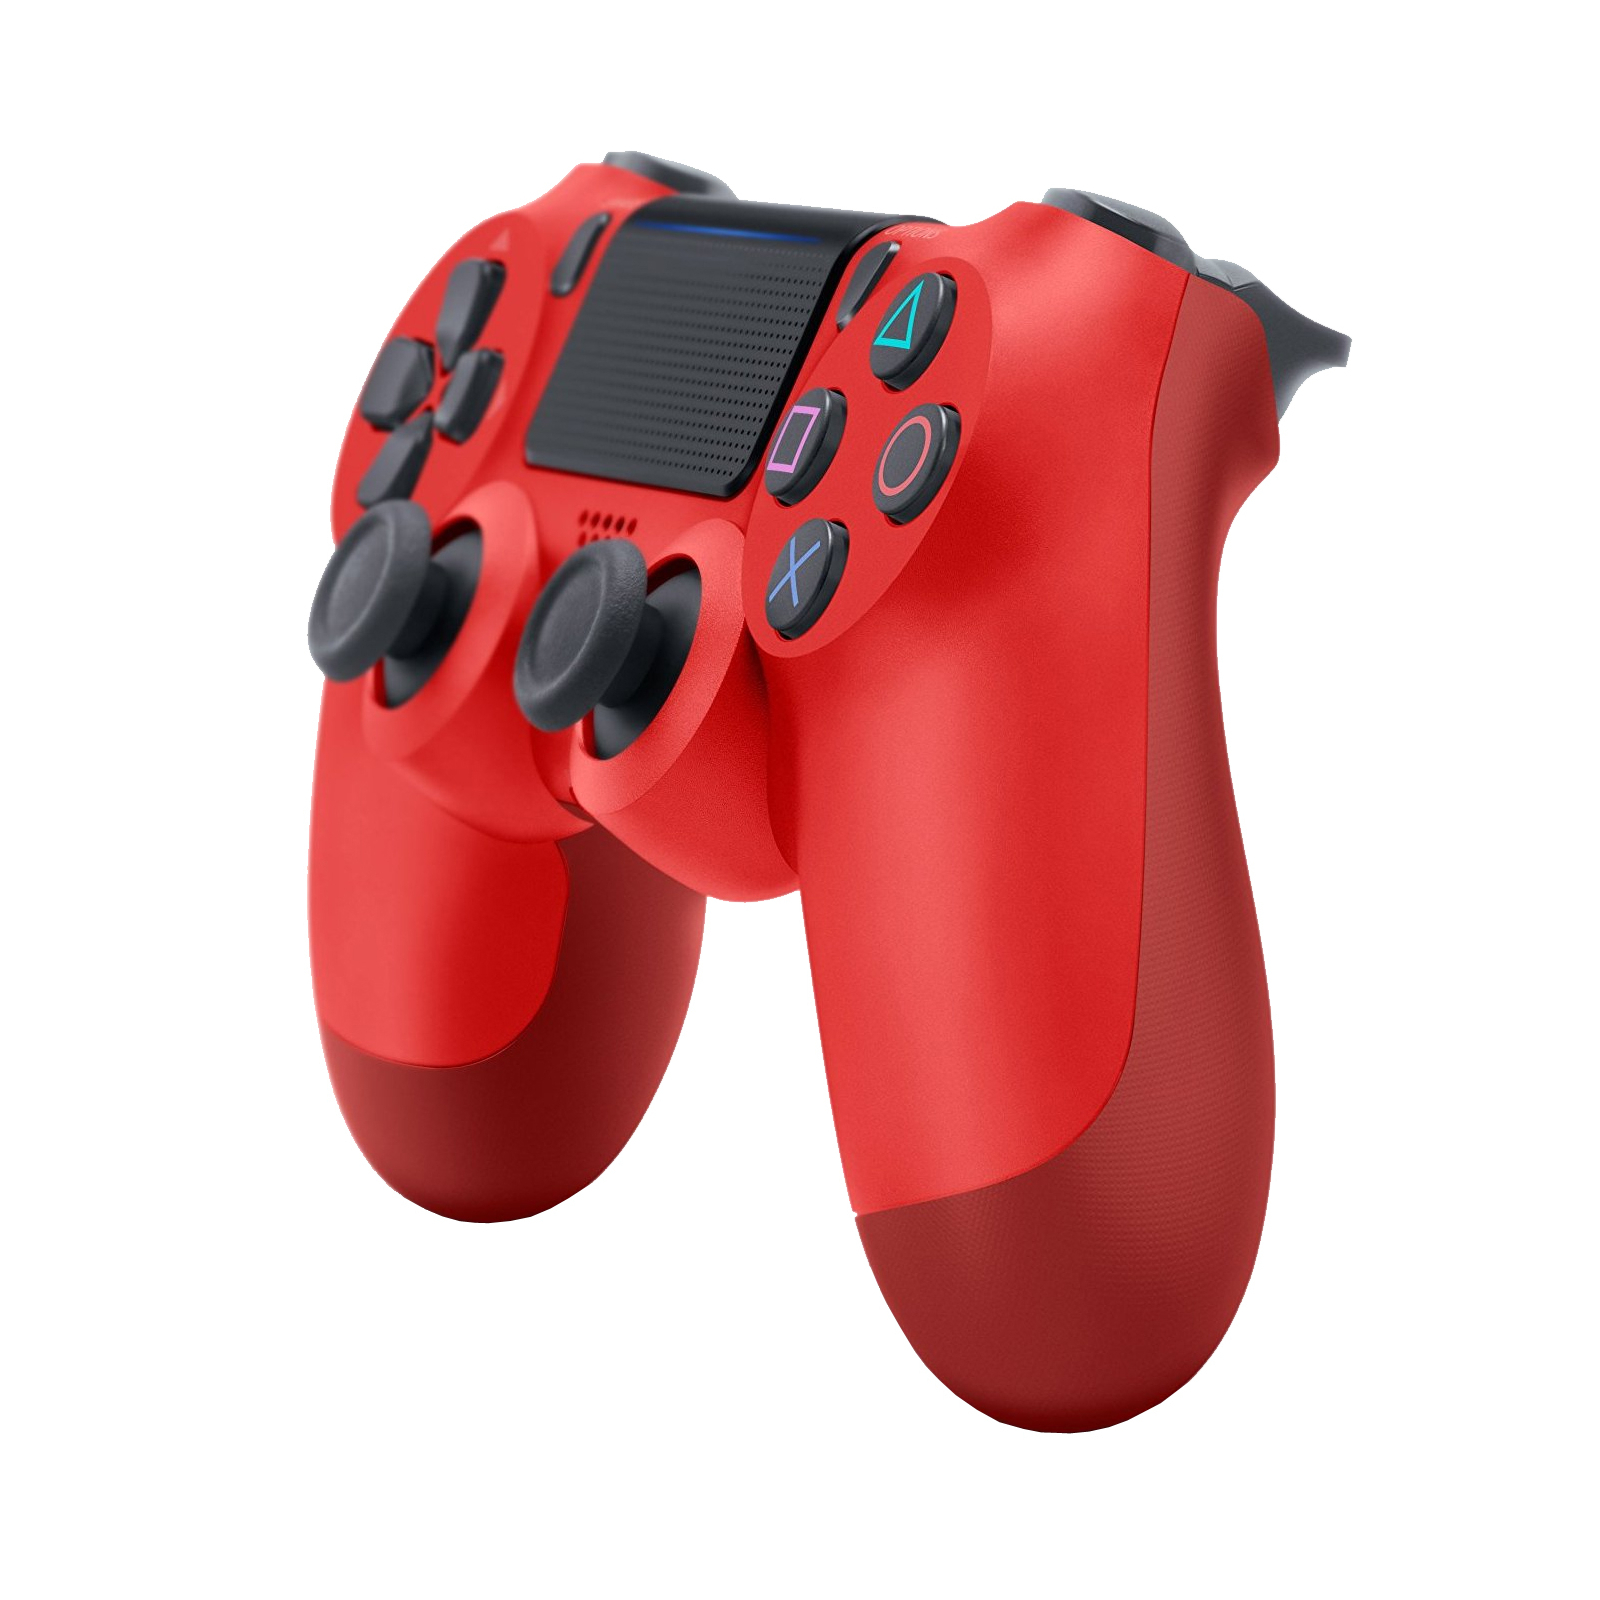 Геймпад Playstation PS4 Dualshock 4 V2 Red зображення 2